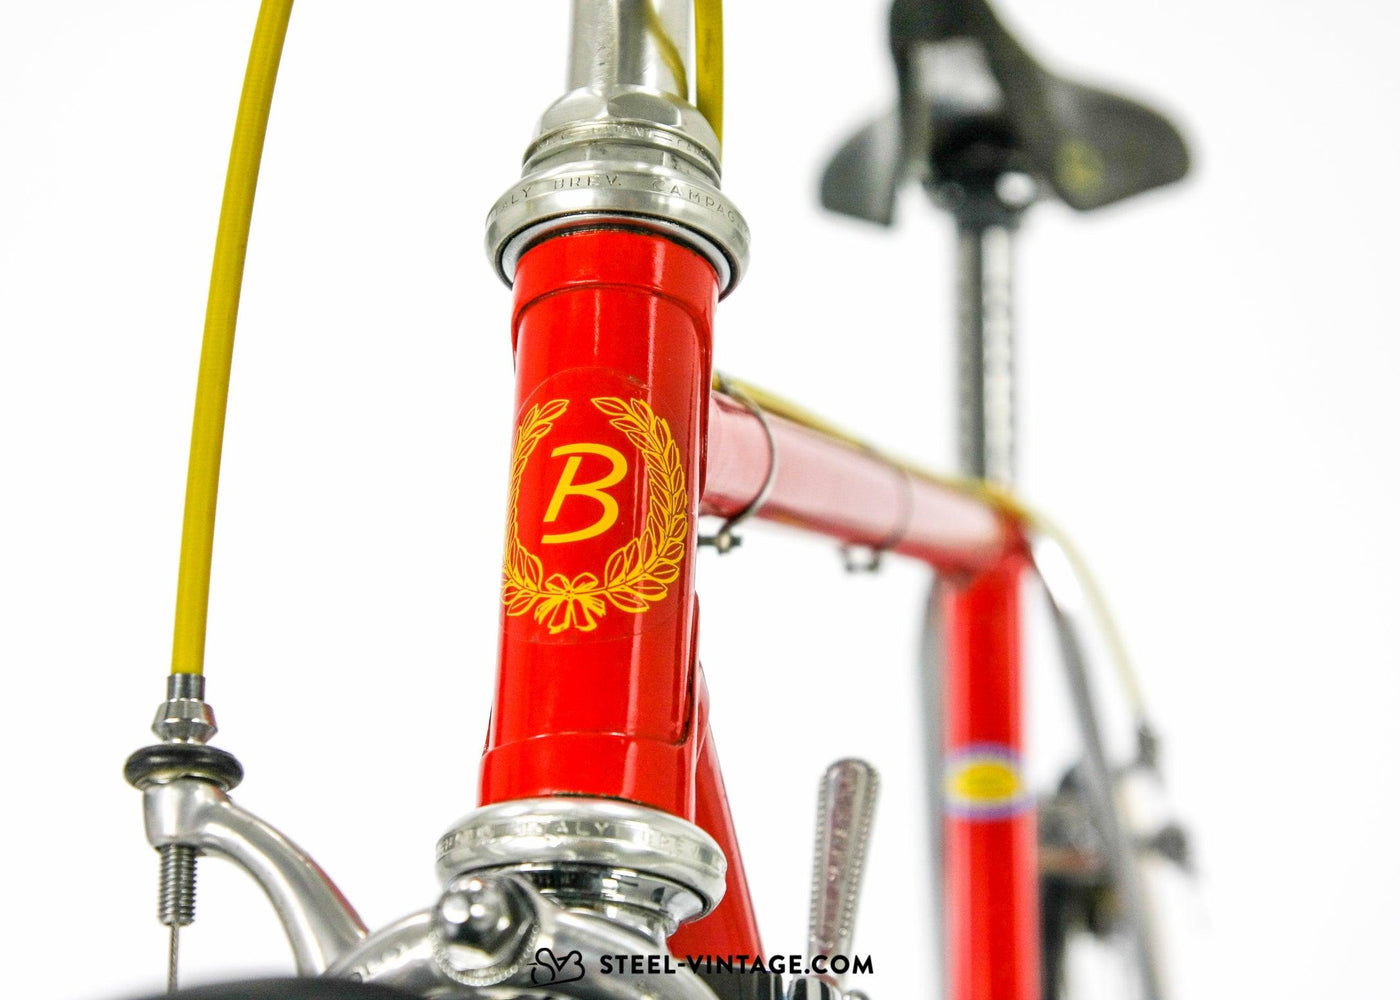 Bazzanella Super Record Classic Bicycle for Eroica - Steel Vintage Bikes